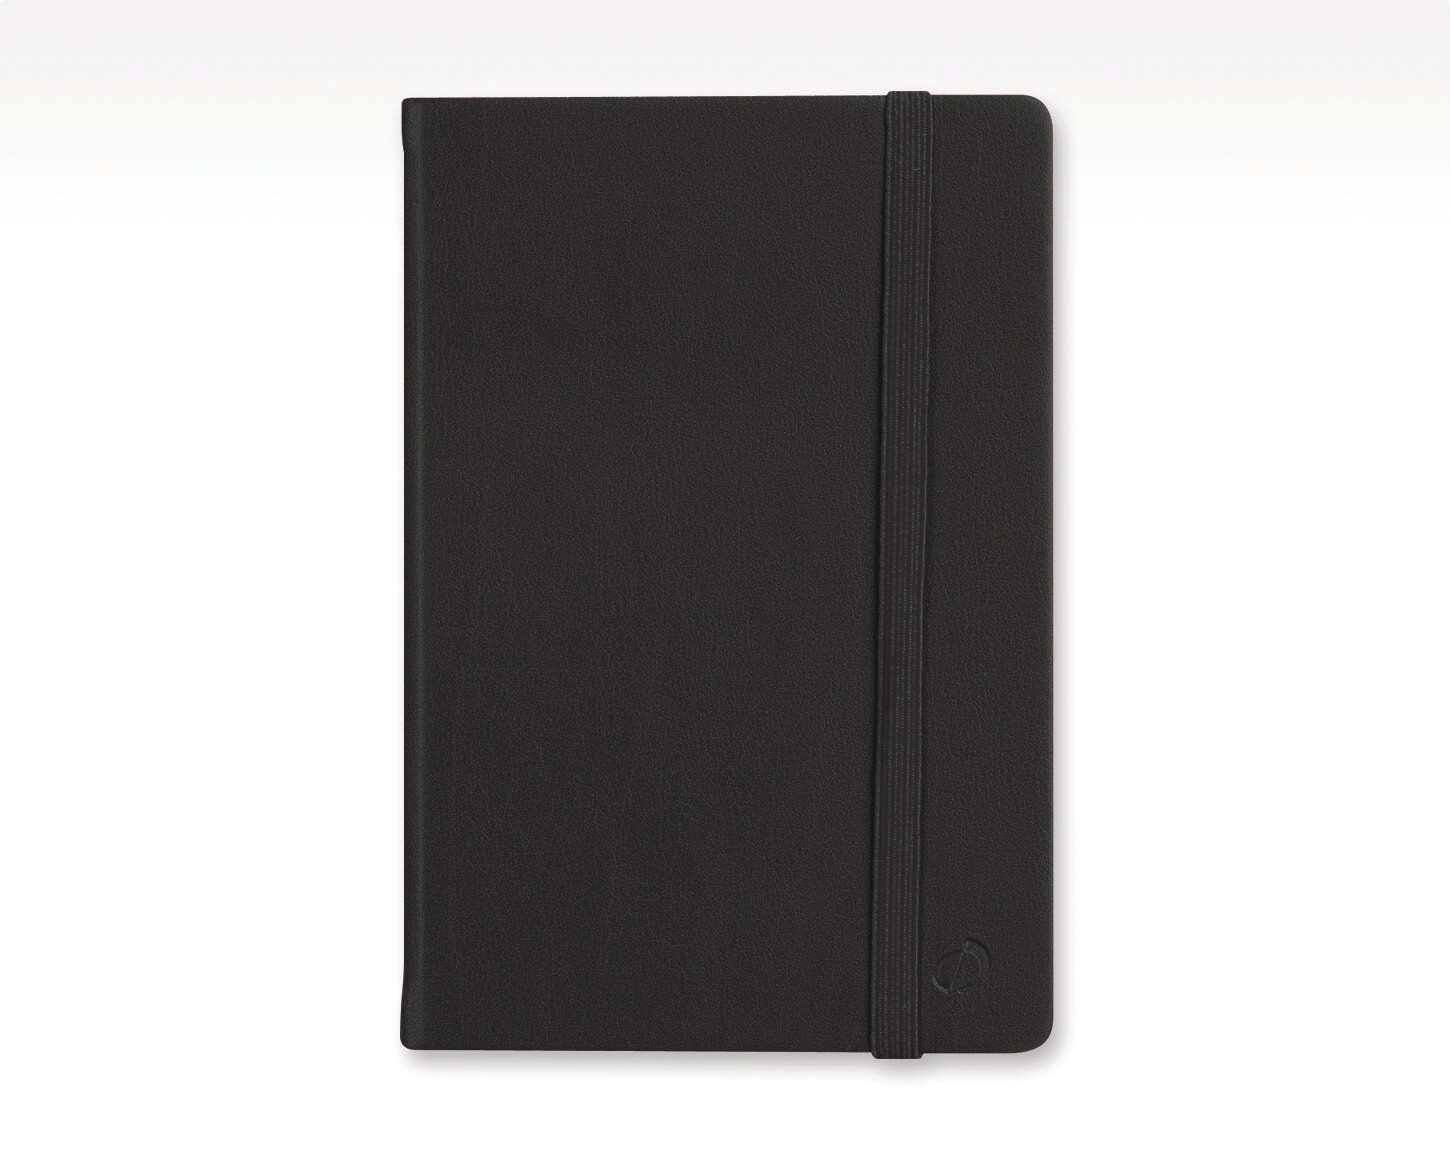 Notebook, Blank, Habana Black, 6.25" x 9.5"